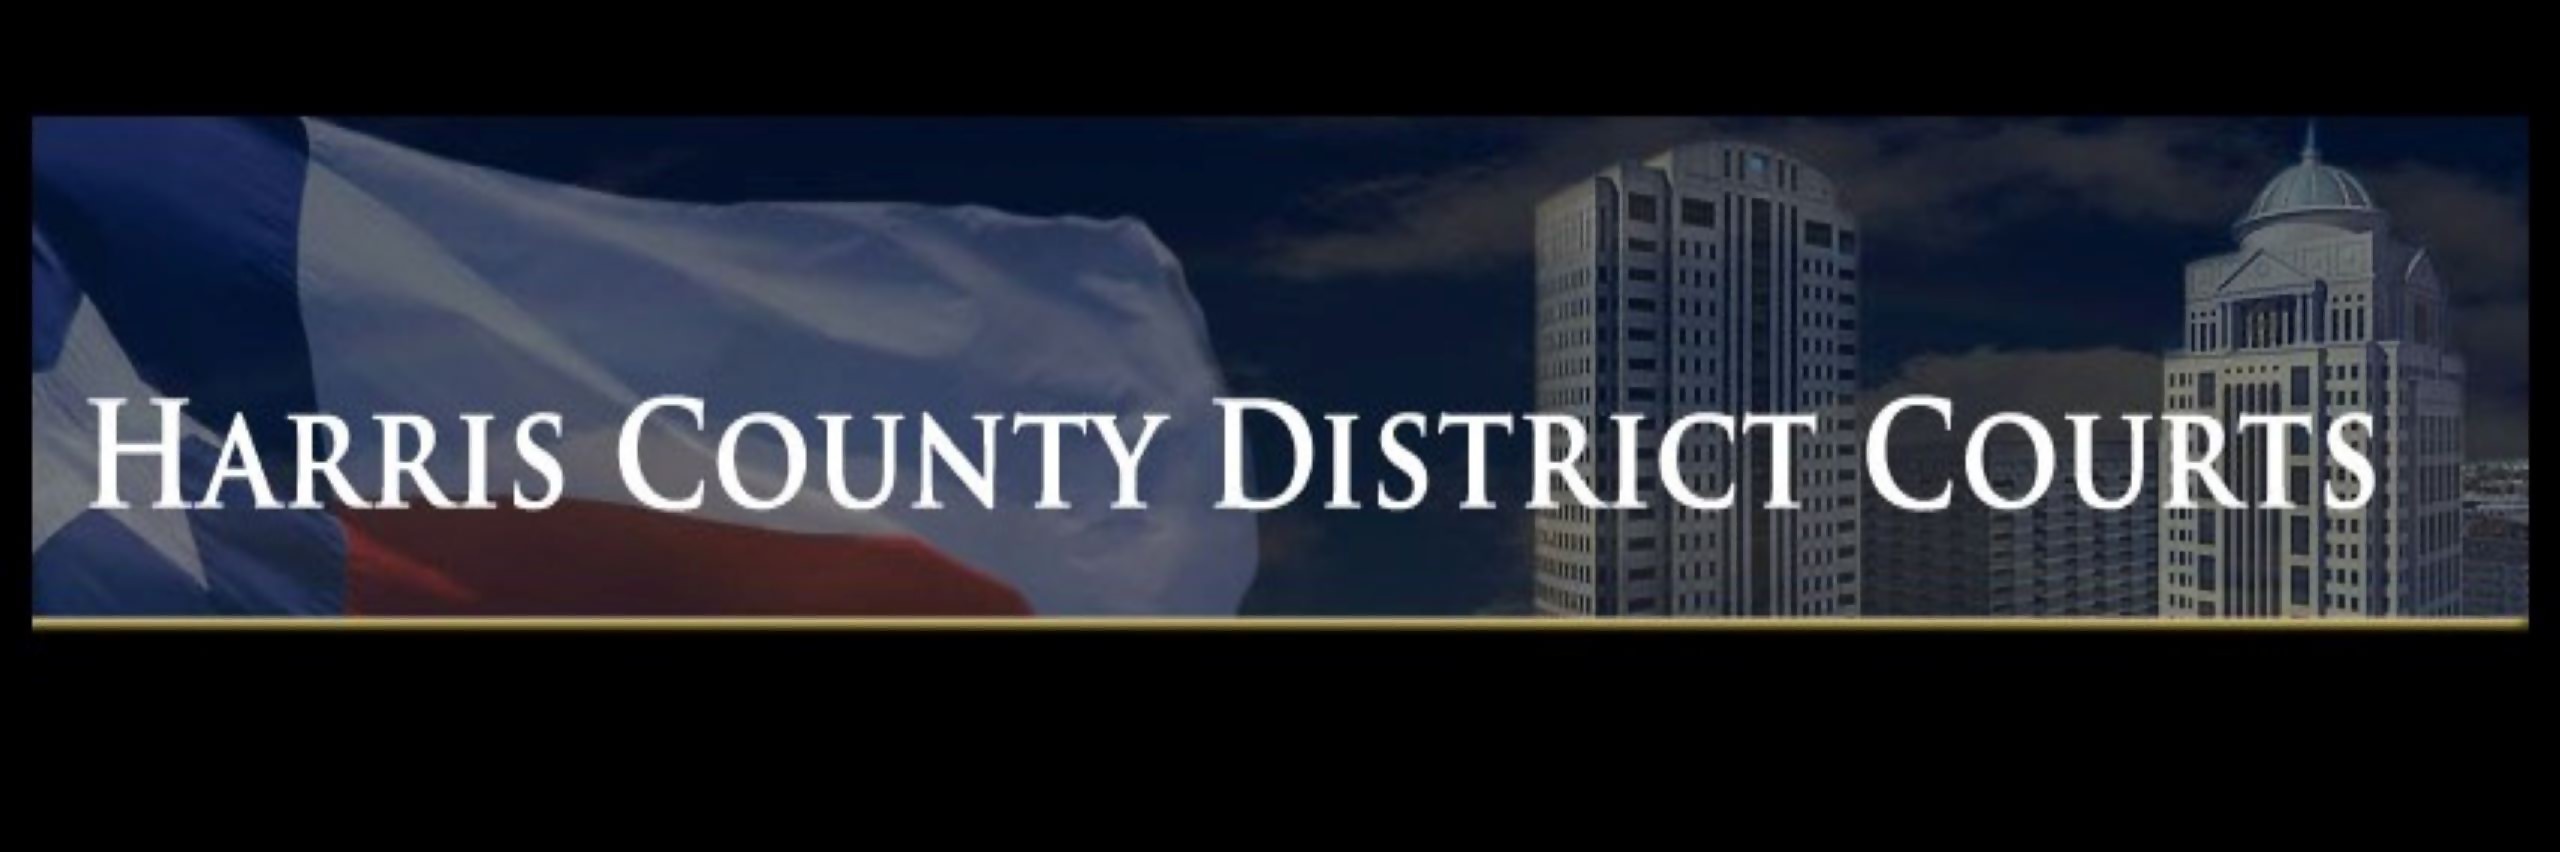 184th District Court - Live Stream